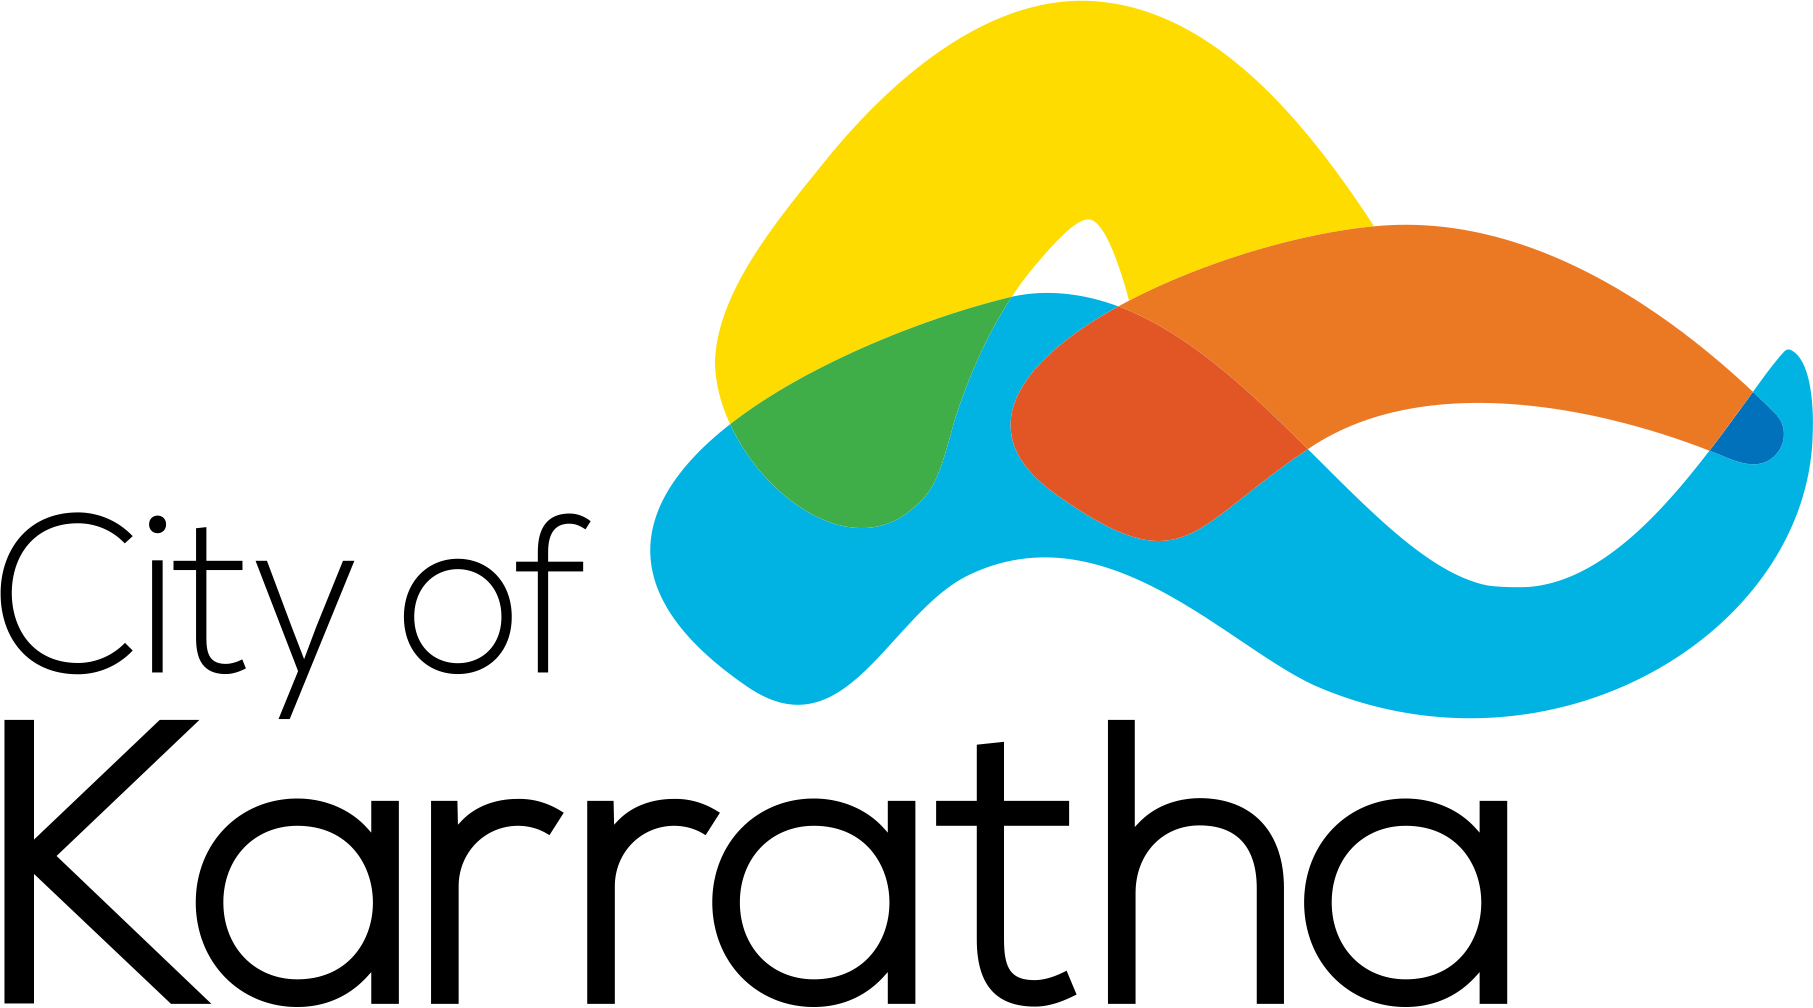 City of Karratha logo